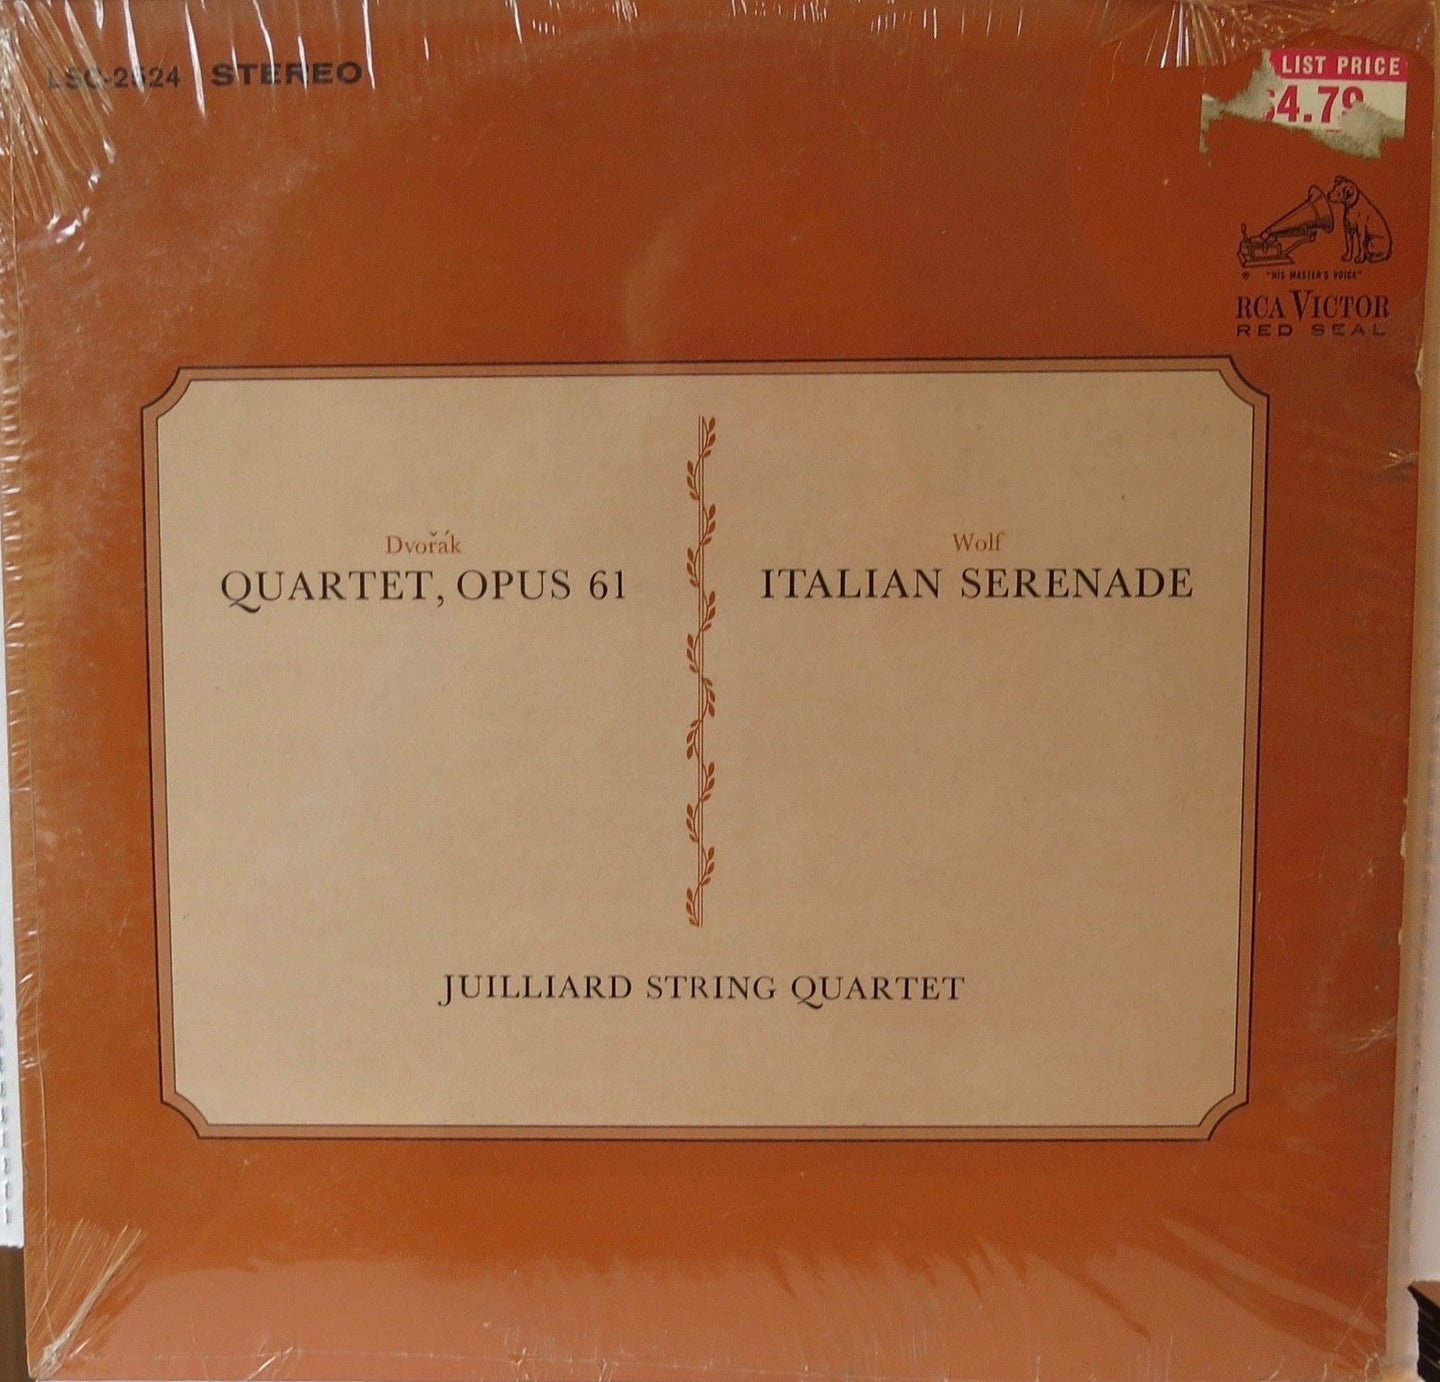 Dvorak Quartet, Opus 61, Wolf Italian Serenade Julliard String Quartet - RCA Victor